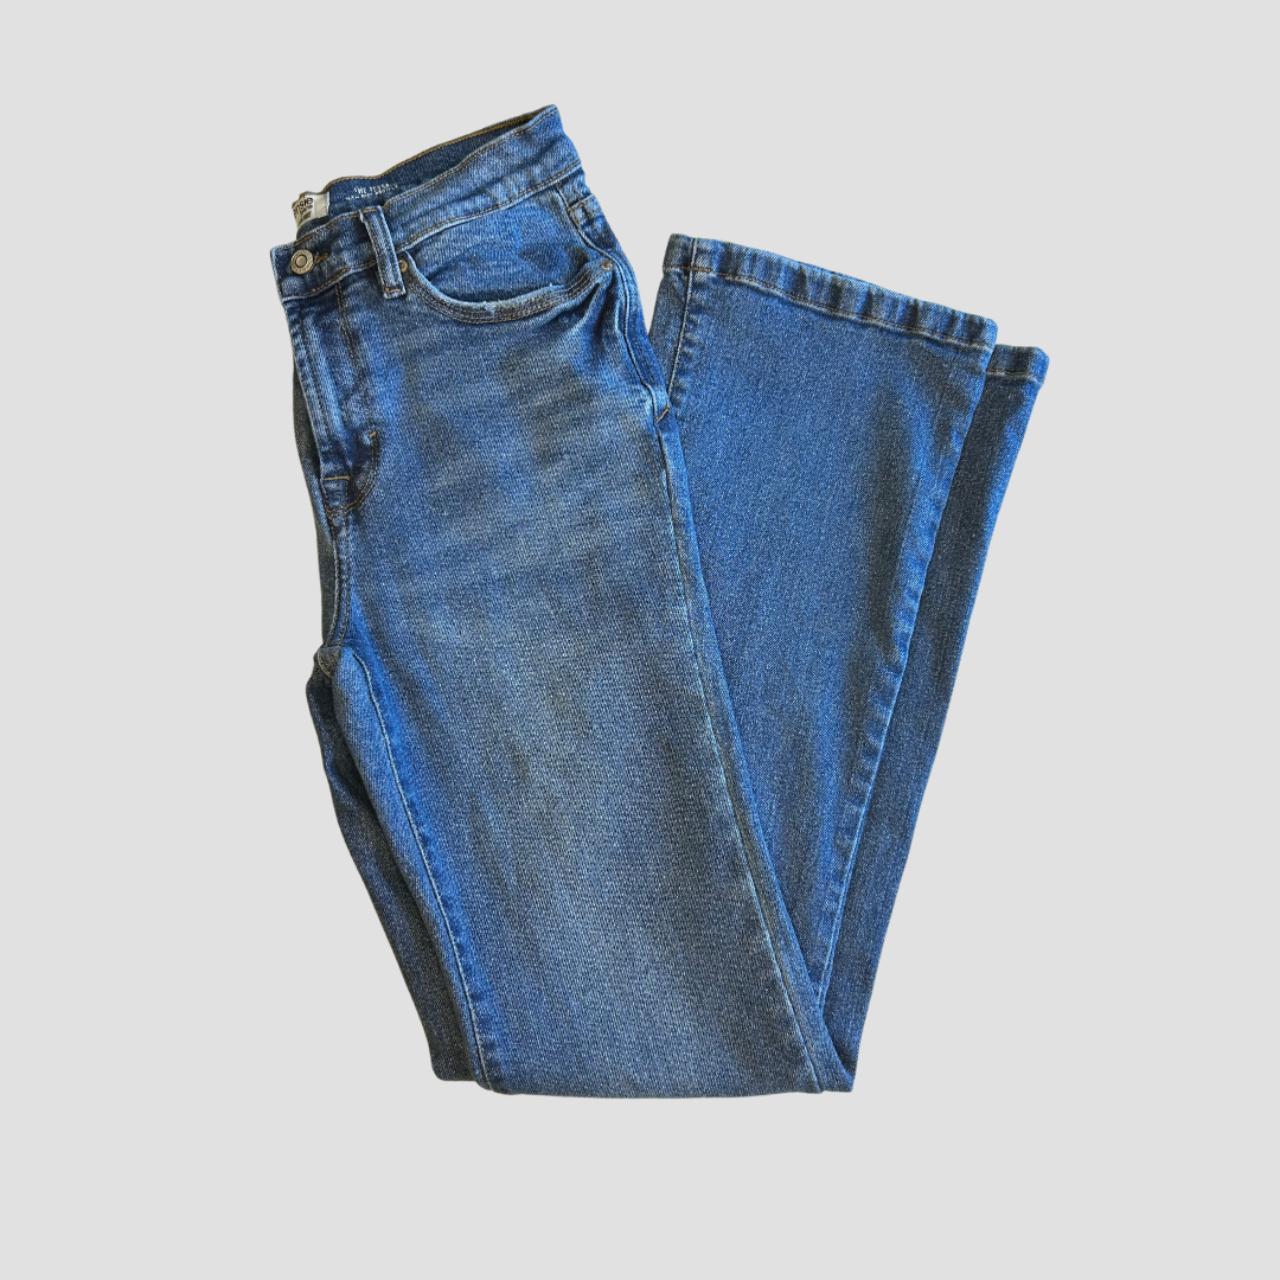 Women's Kensie Jeans stretchy blue denim jeans with - Depop